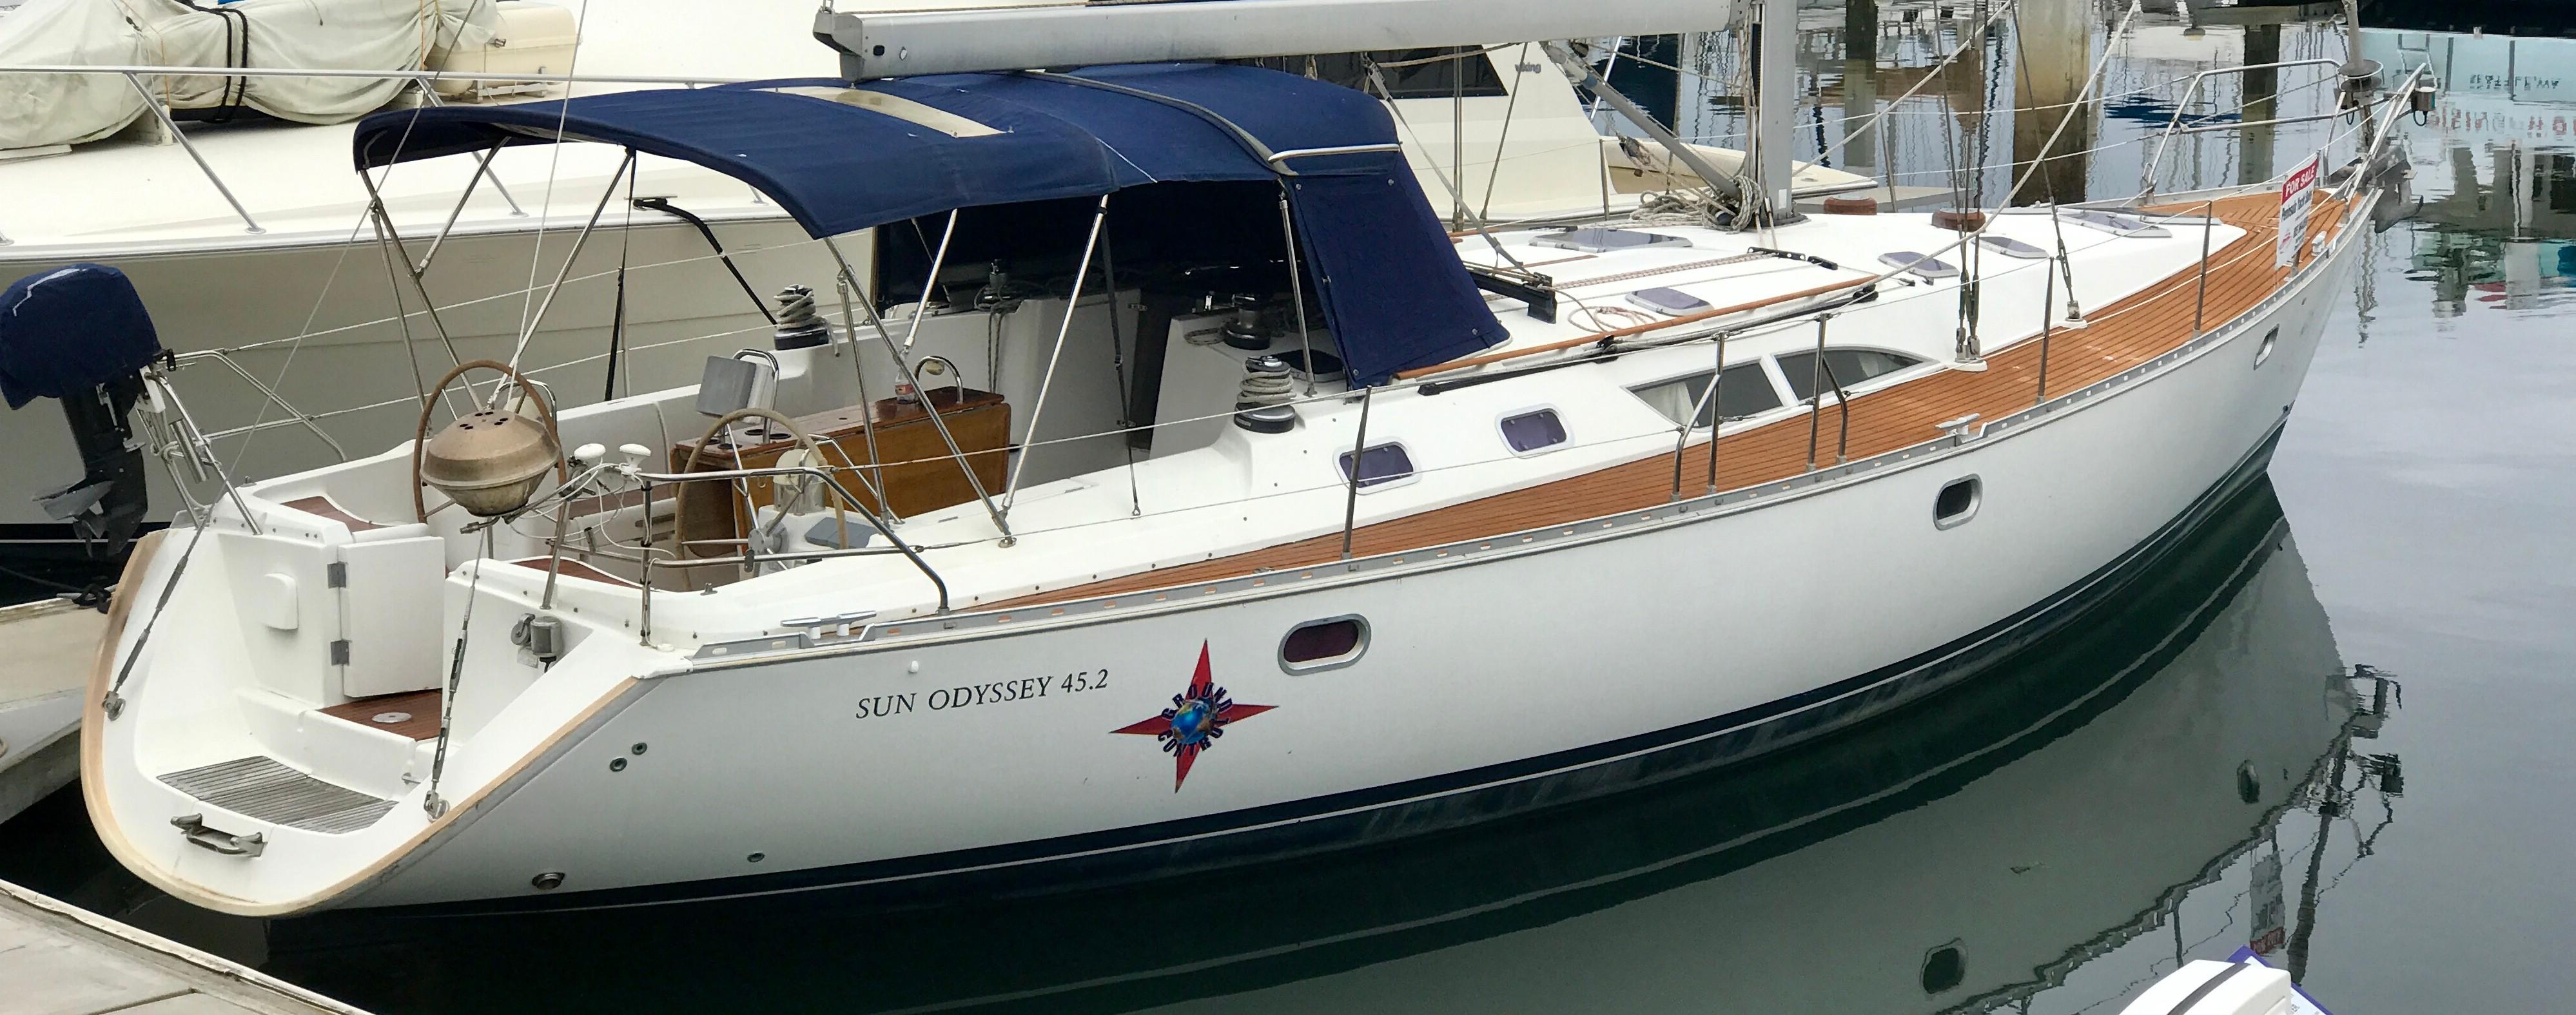 jeanneau sailboat for sale california